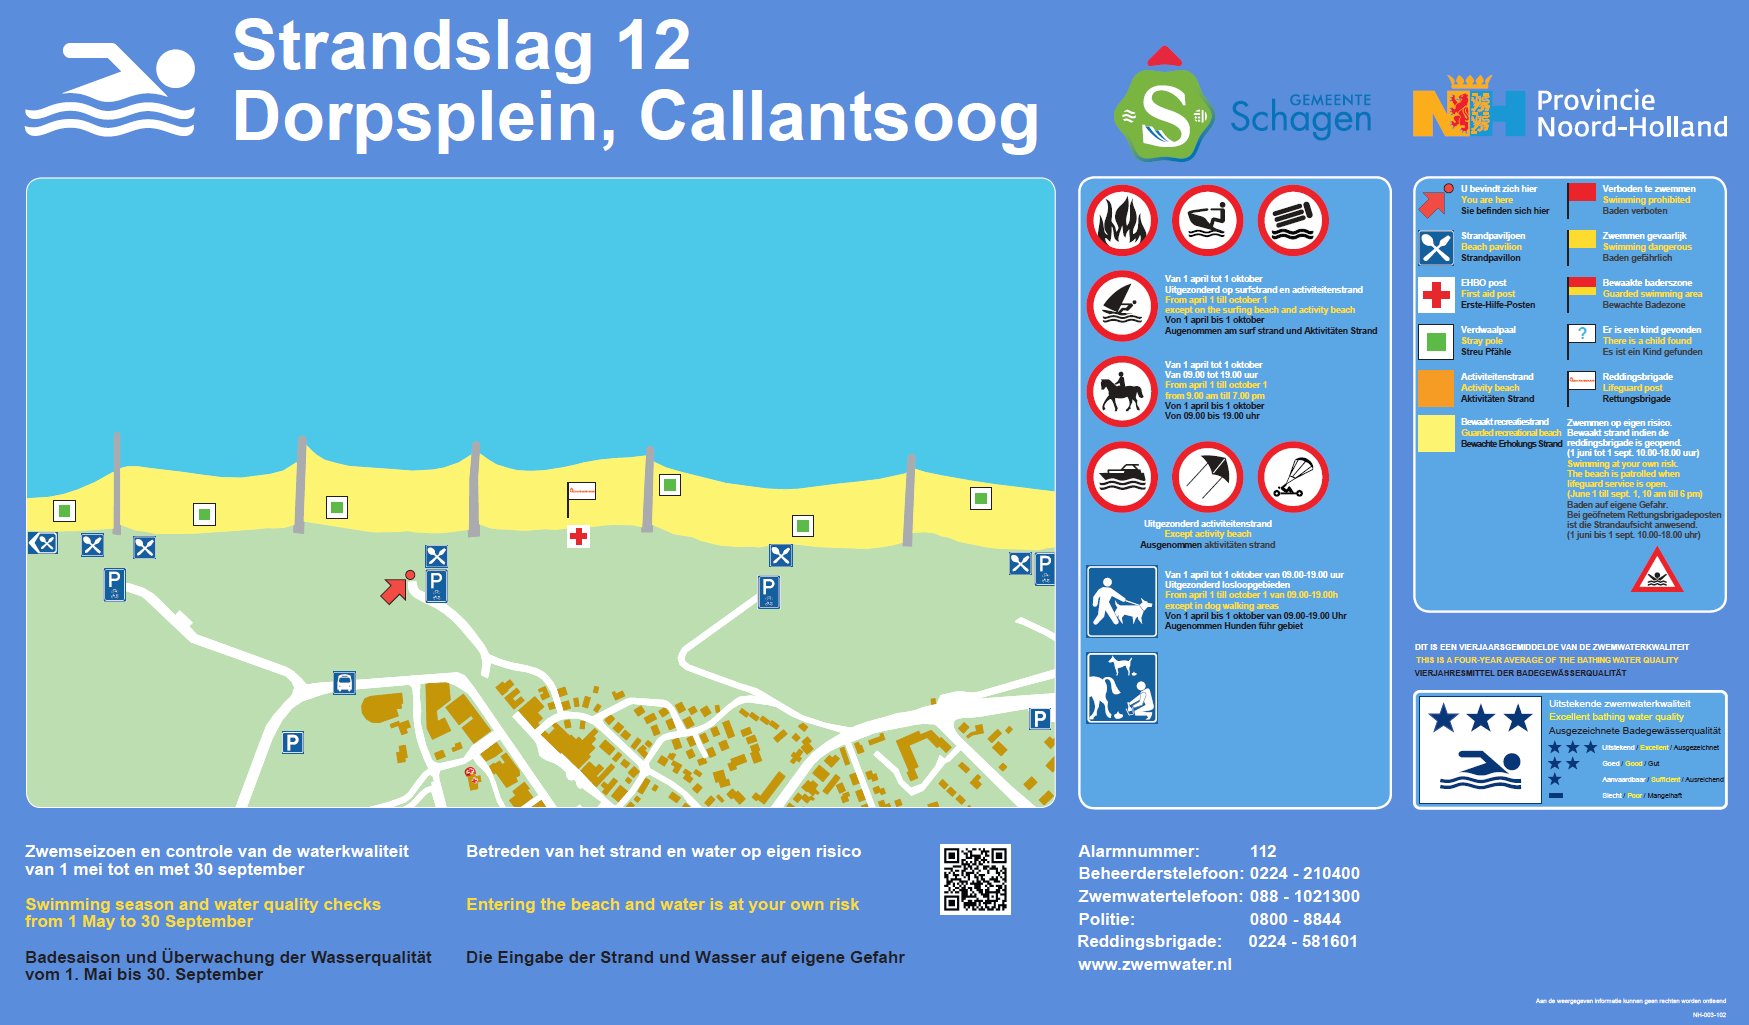 The information board at the swimming location Callantsoog, Strandslag 12 Dorpsplein